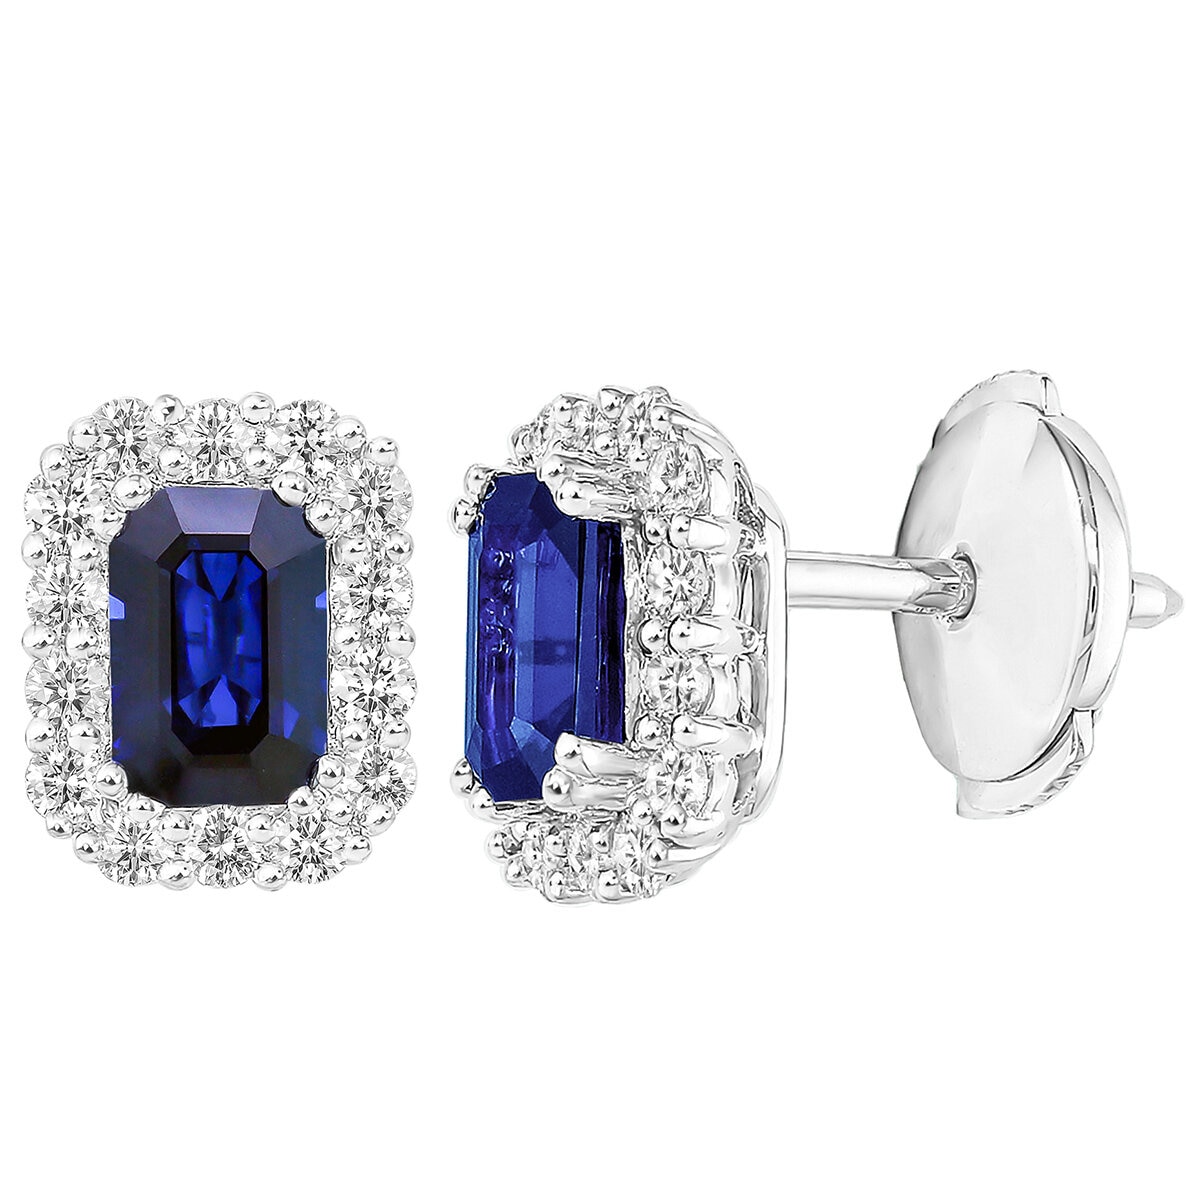 18KT WG 0.40CTW Diamond Sapphire Centre Earrings